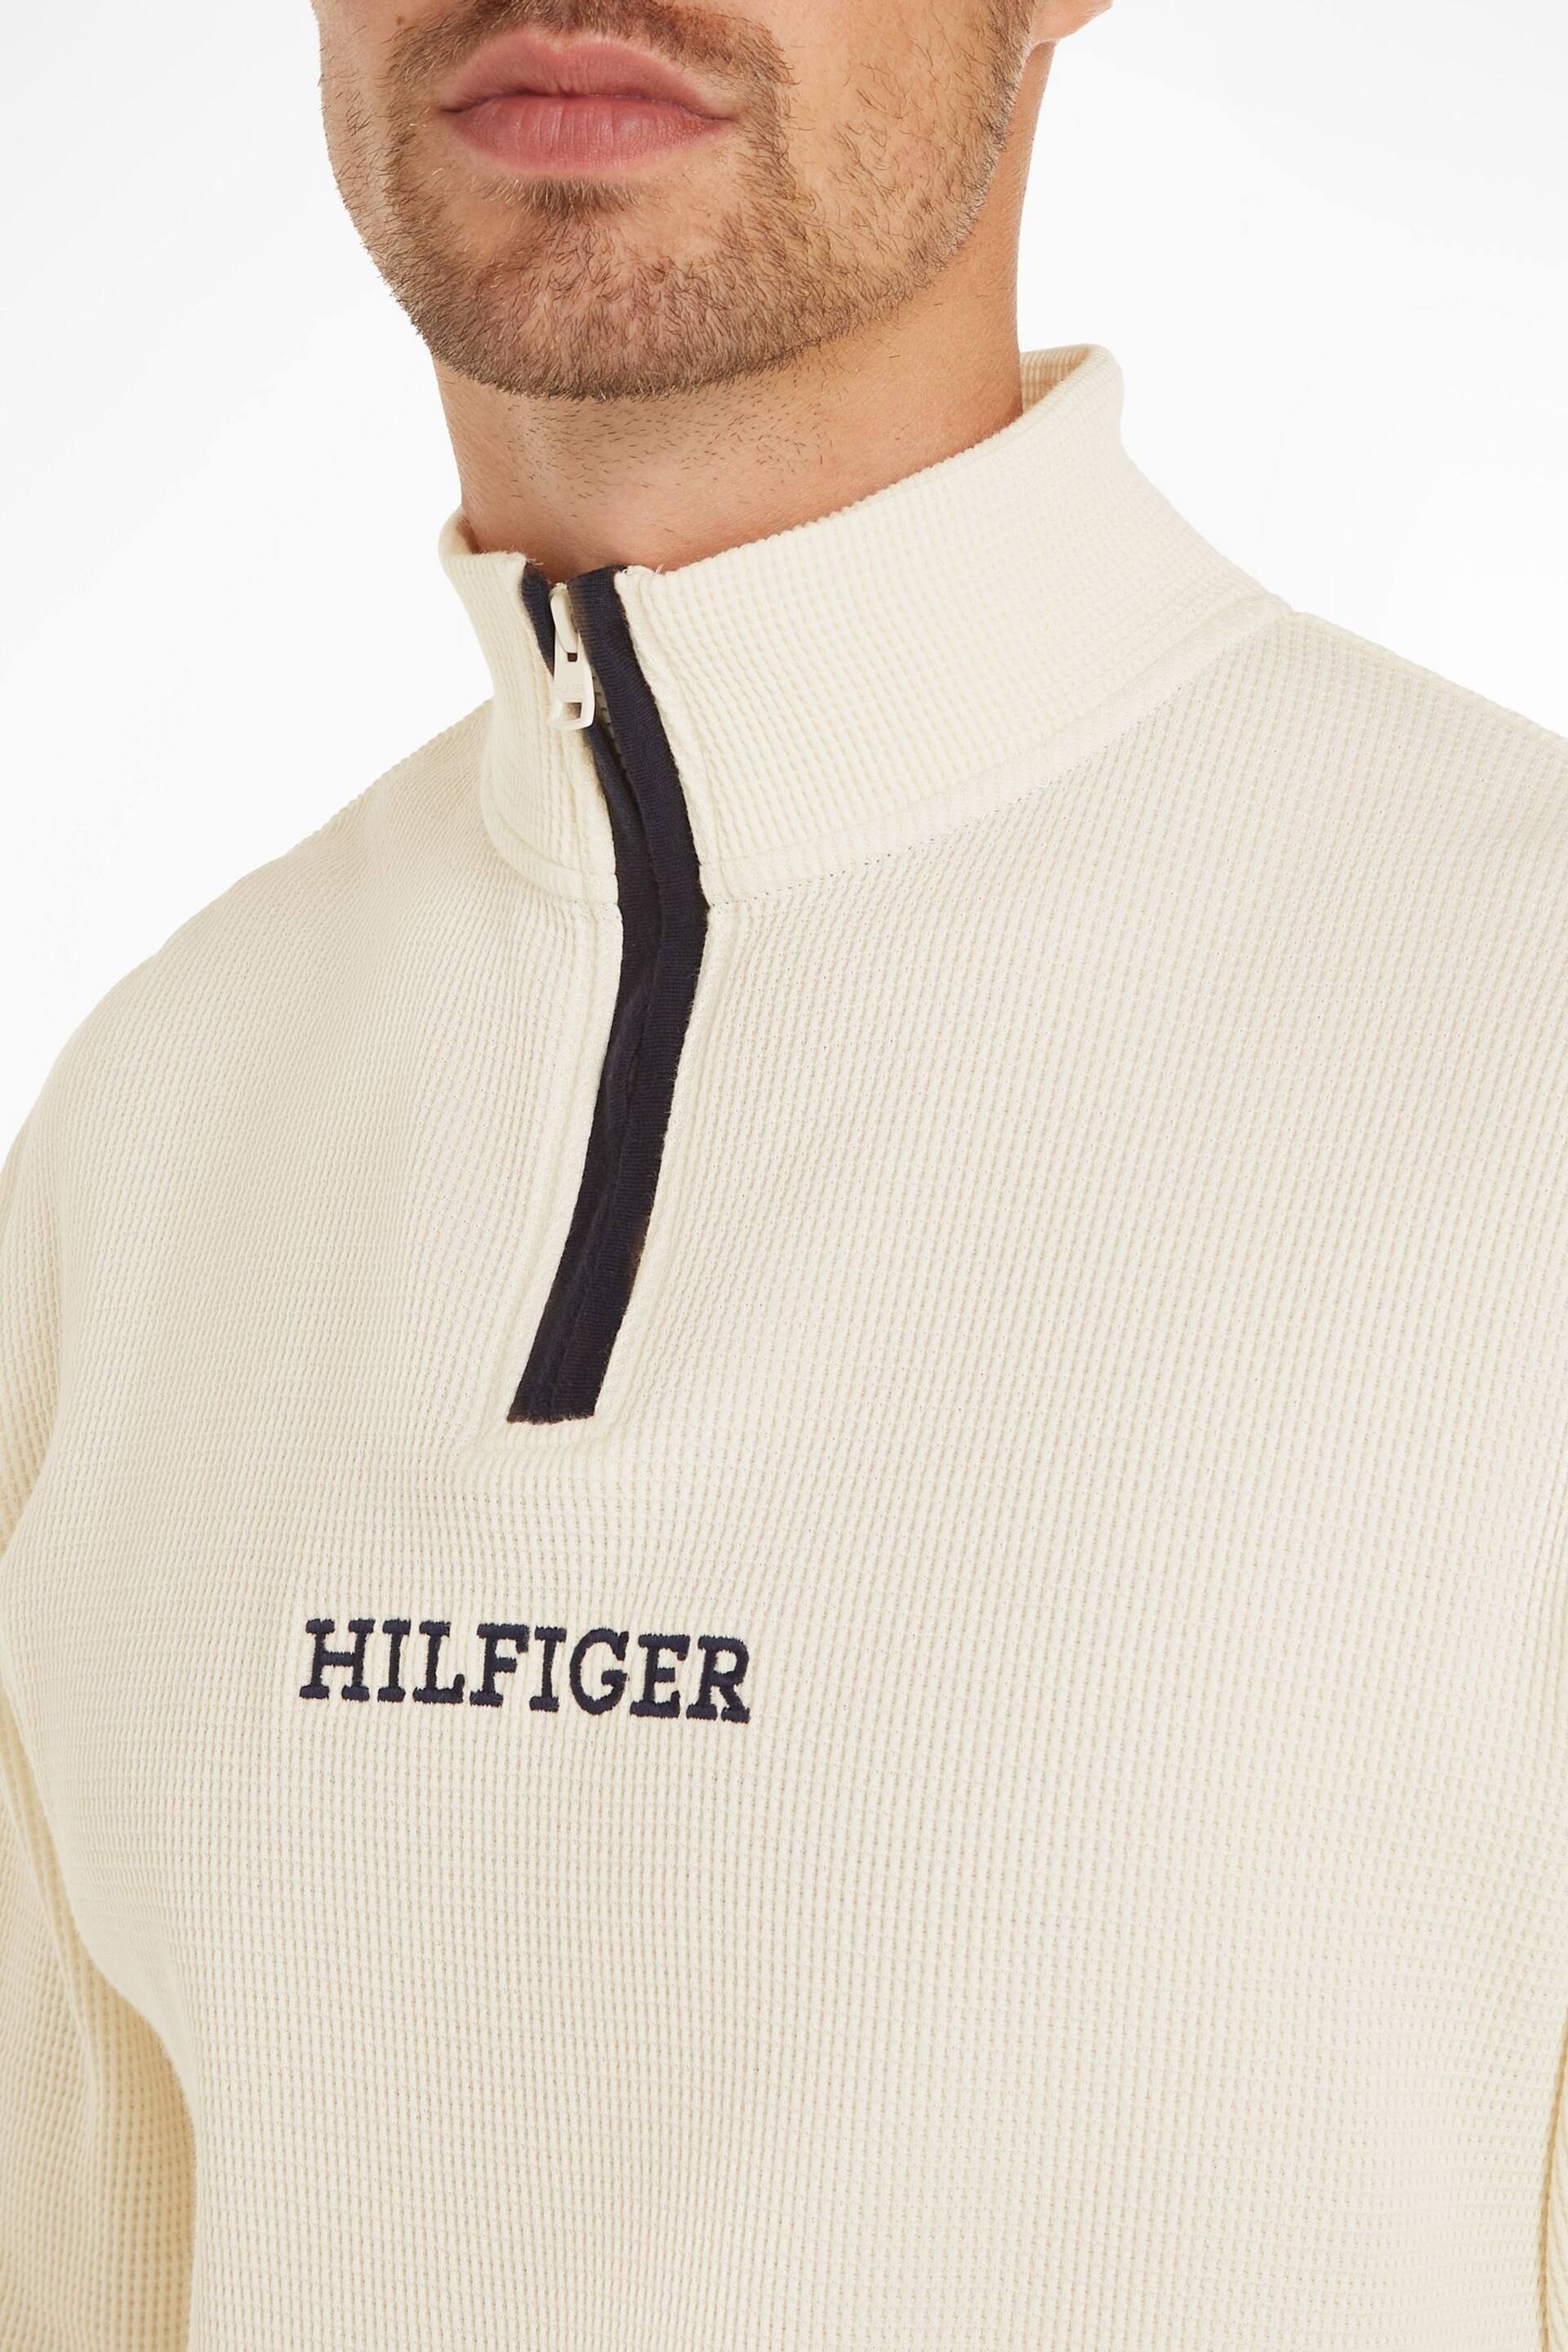 Tommy Hilfiger Cream Half Zip Sweater - Image 3 of 6